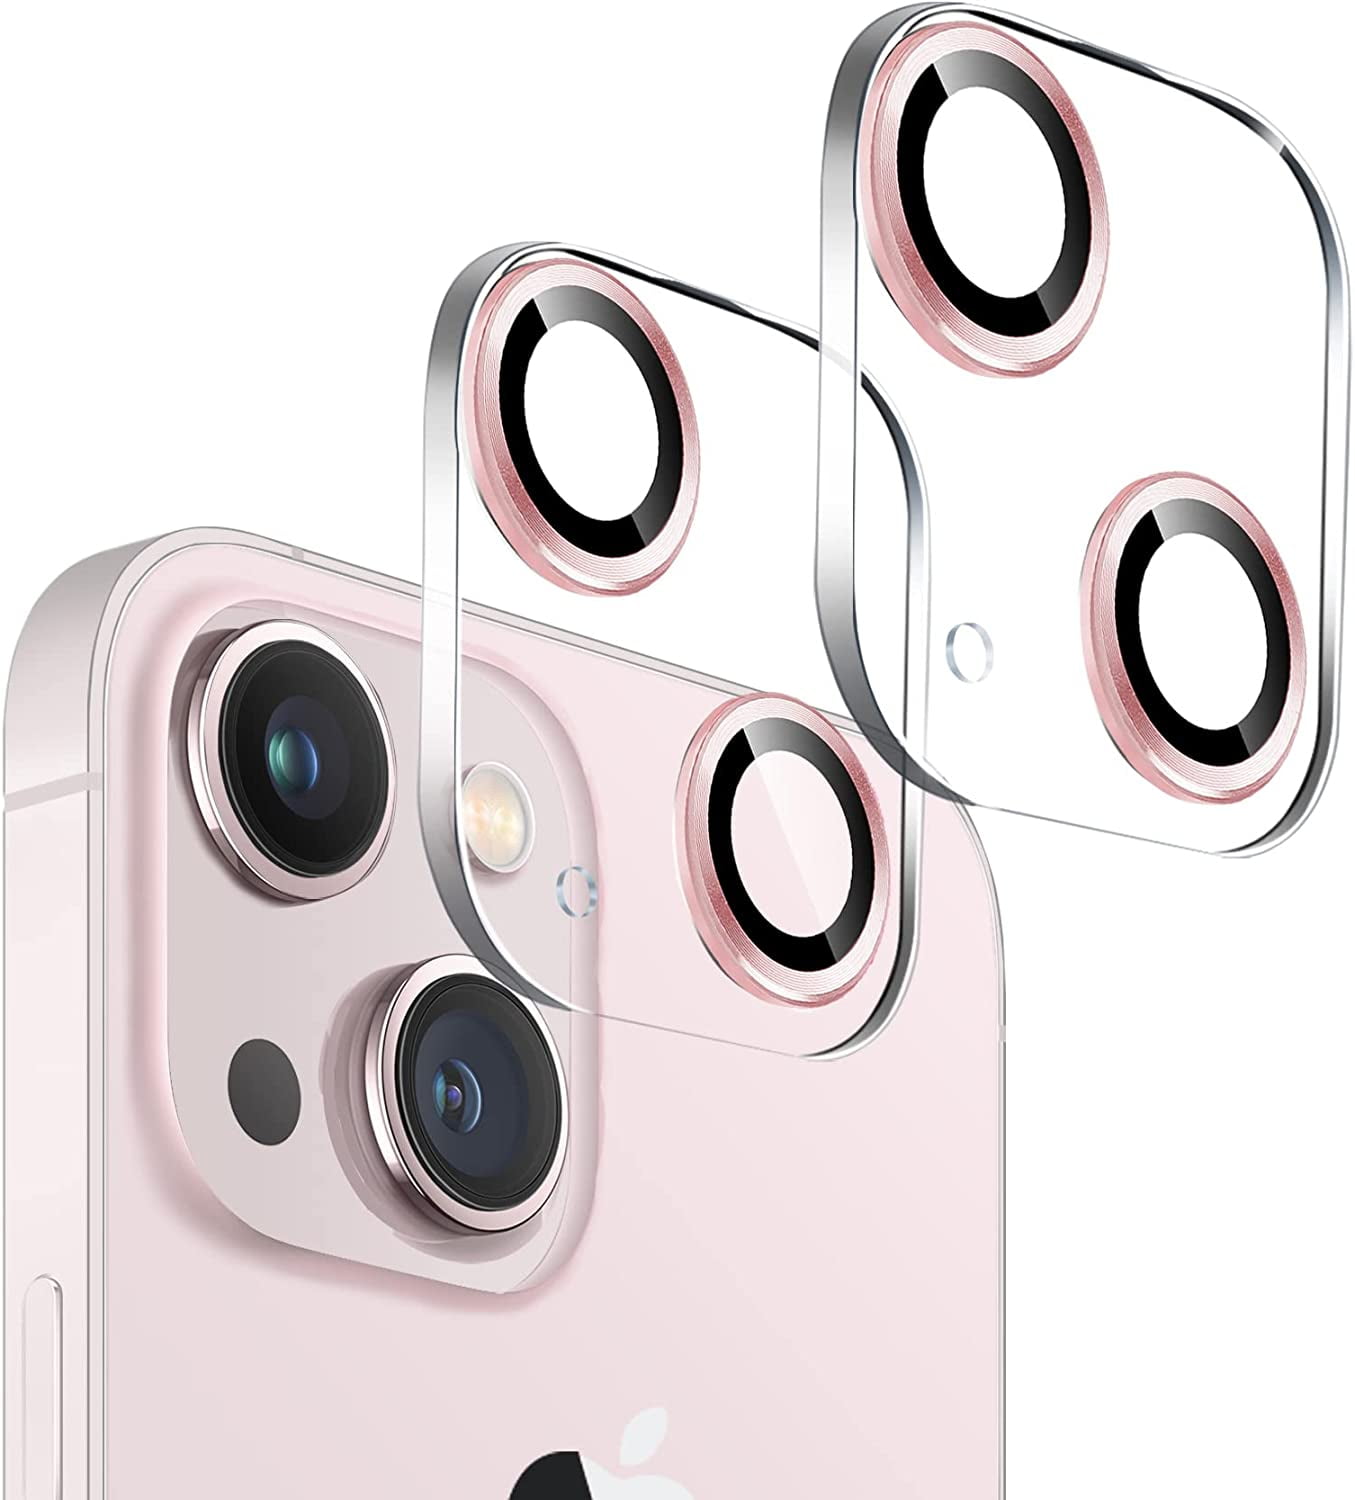 QDOS OptiGuard Camera Lens Protector iPhone 13 mini